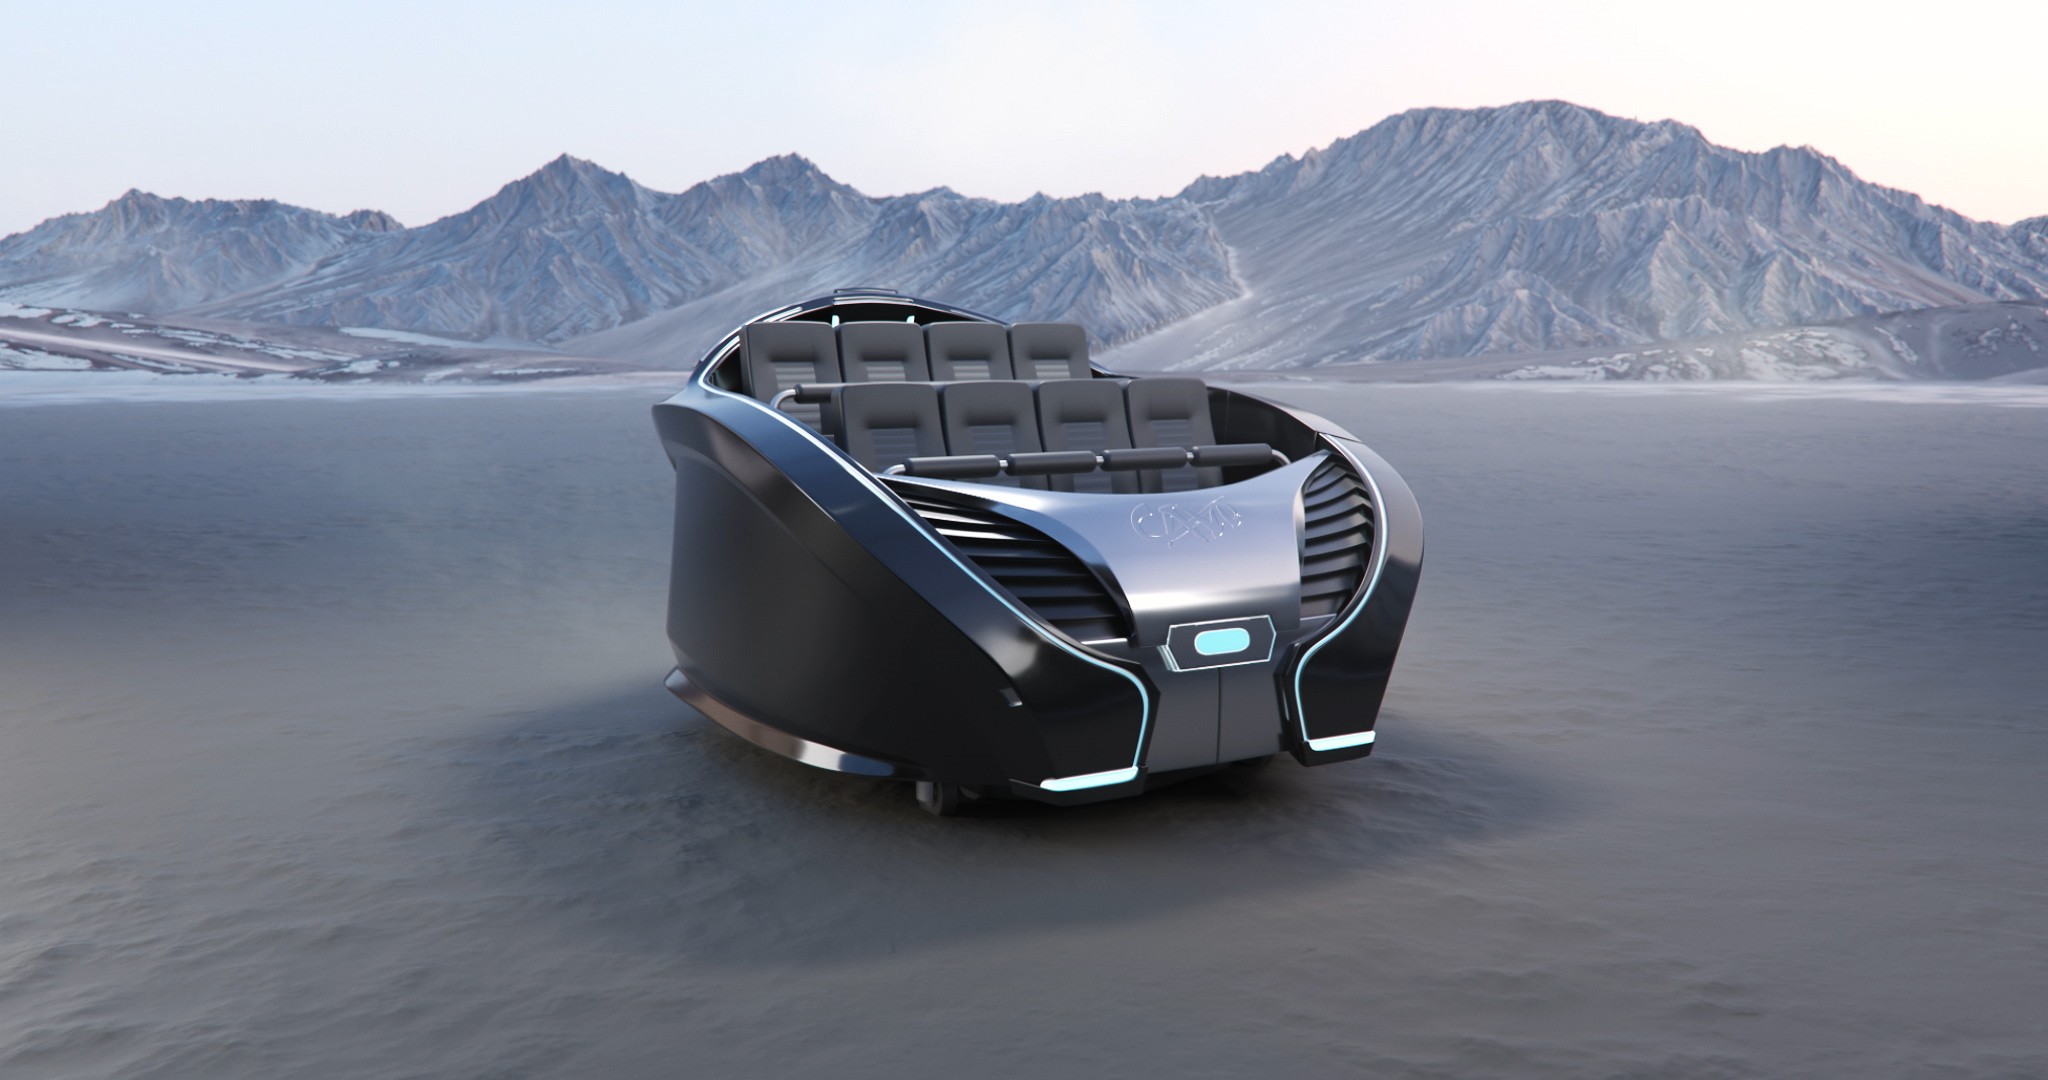 CAVU Designwerks: Self-Driving Vehicle